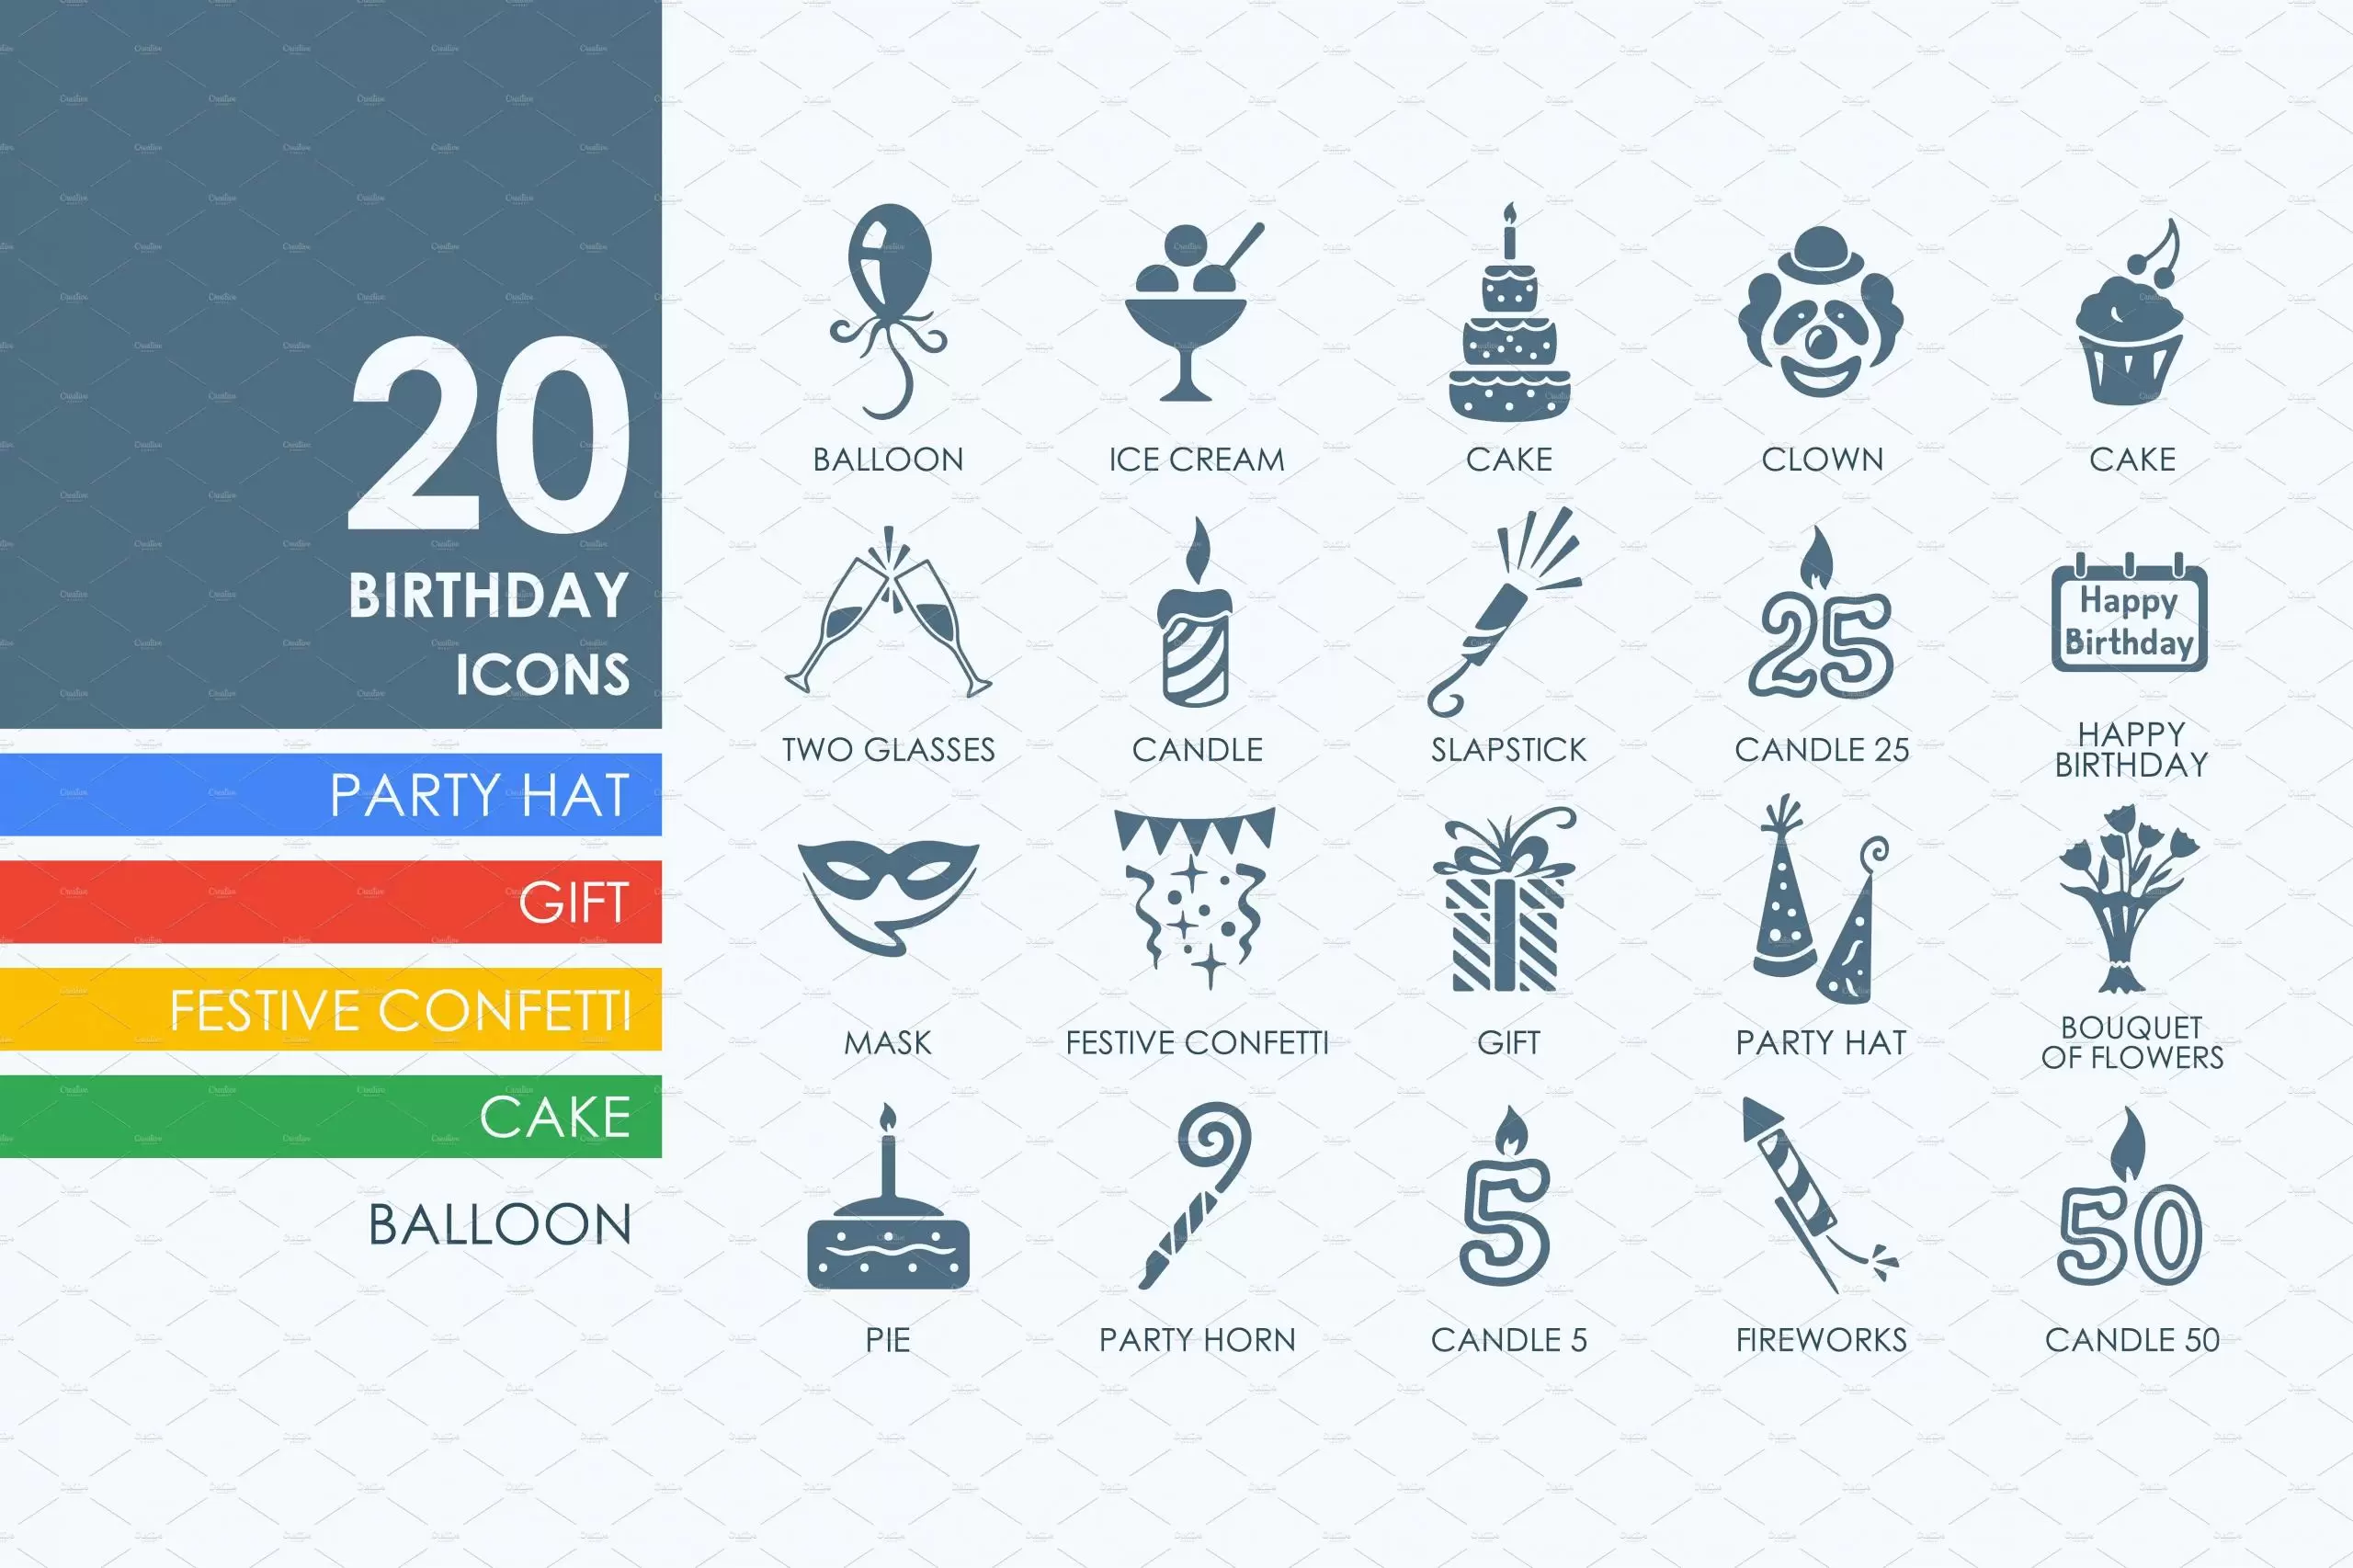 生日物品图标 20 birthday icons插图